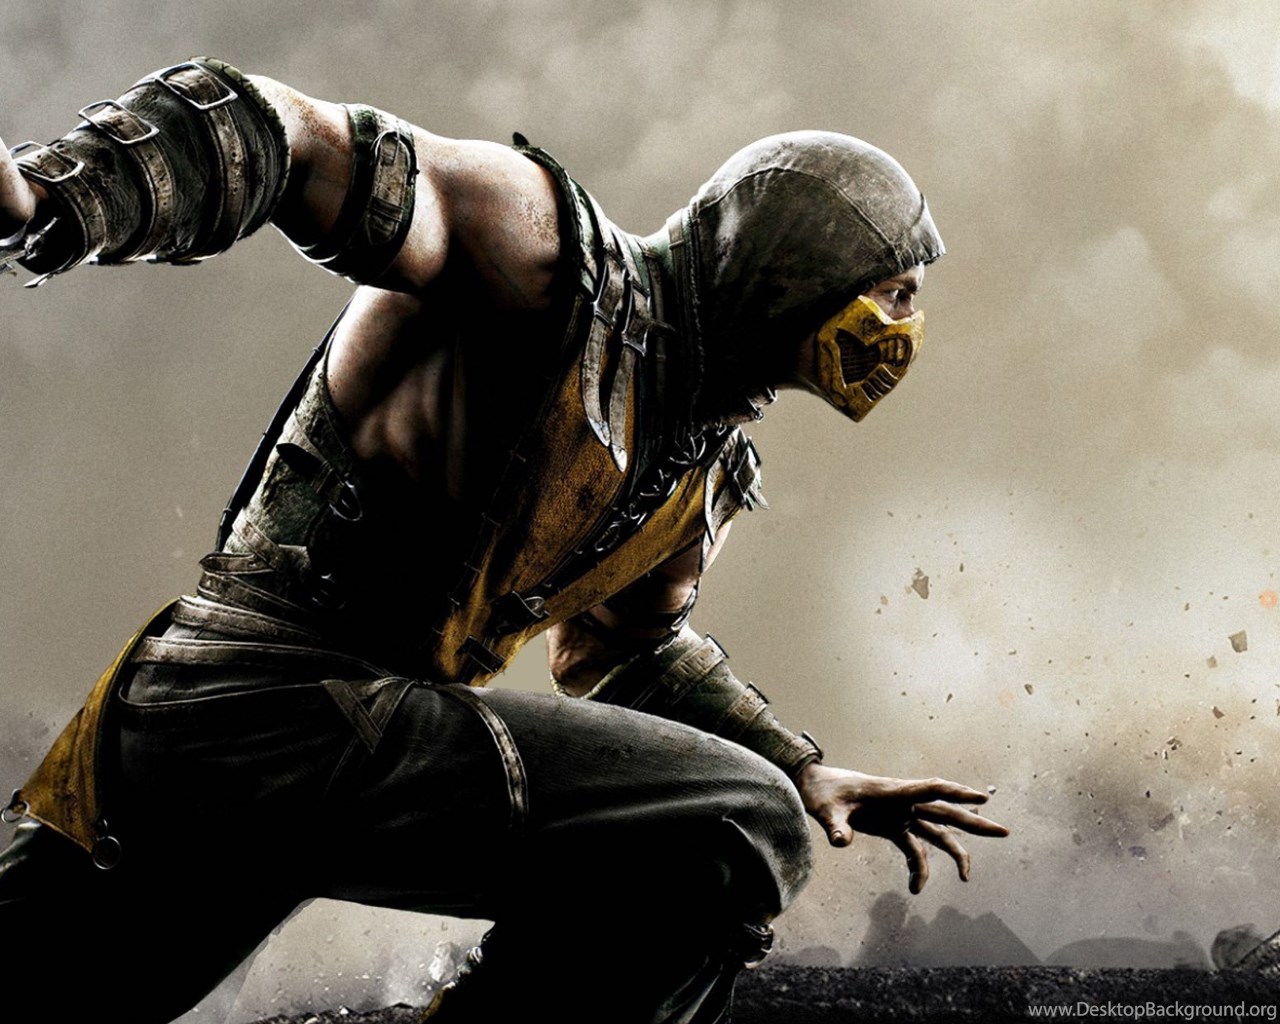 Hd Backgrounds Mortal Kombat X Scorpion Wallpapers Desktop Background